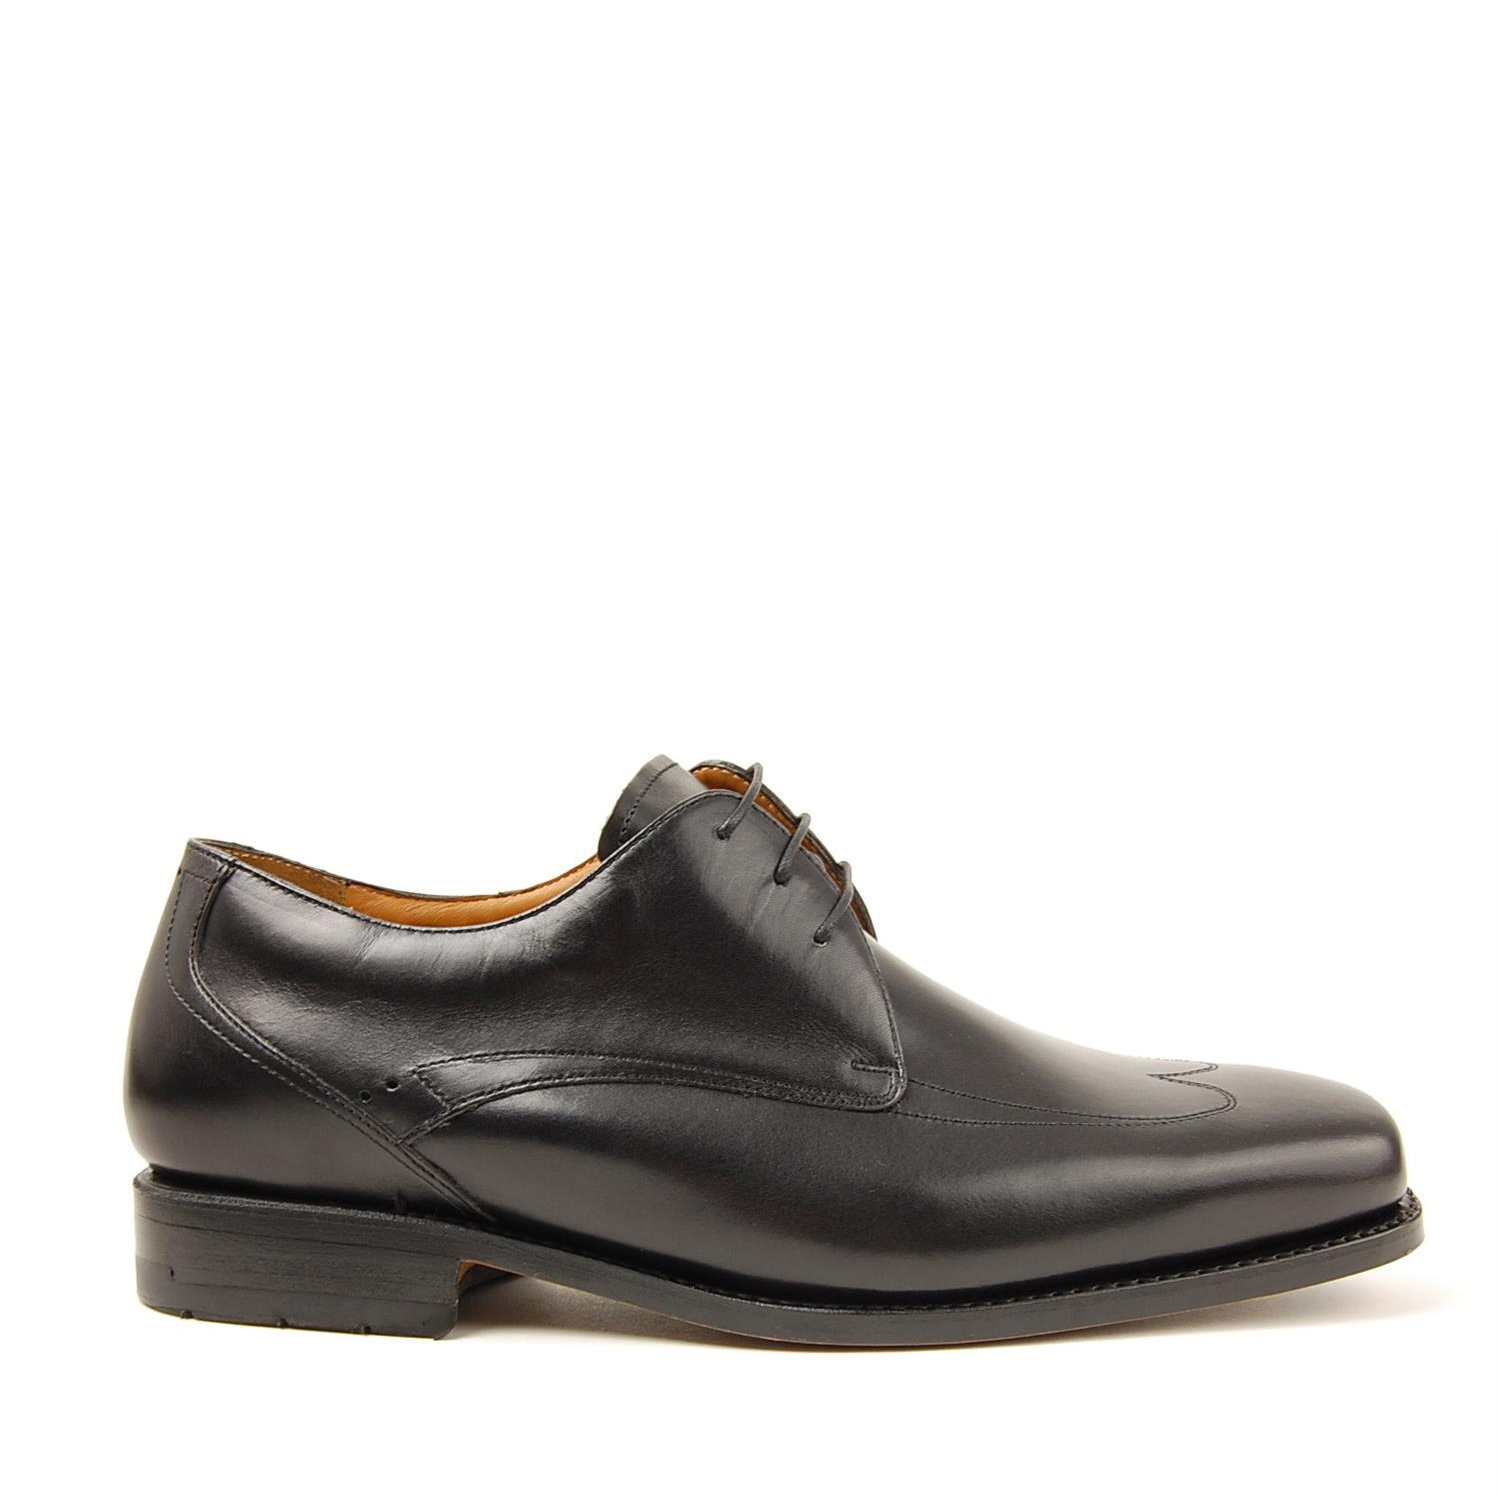 Van Bommel Classic Black Calf order online | Oxener Shoes